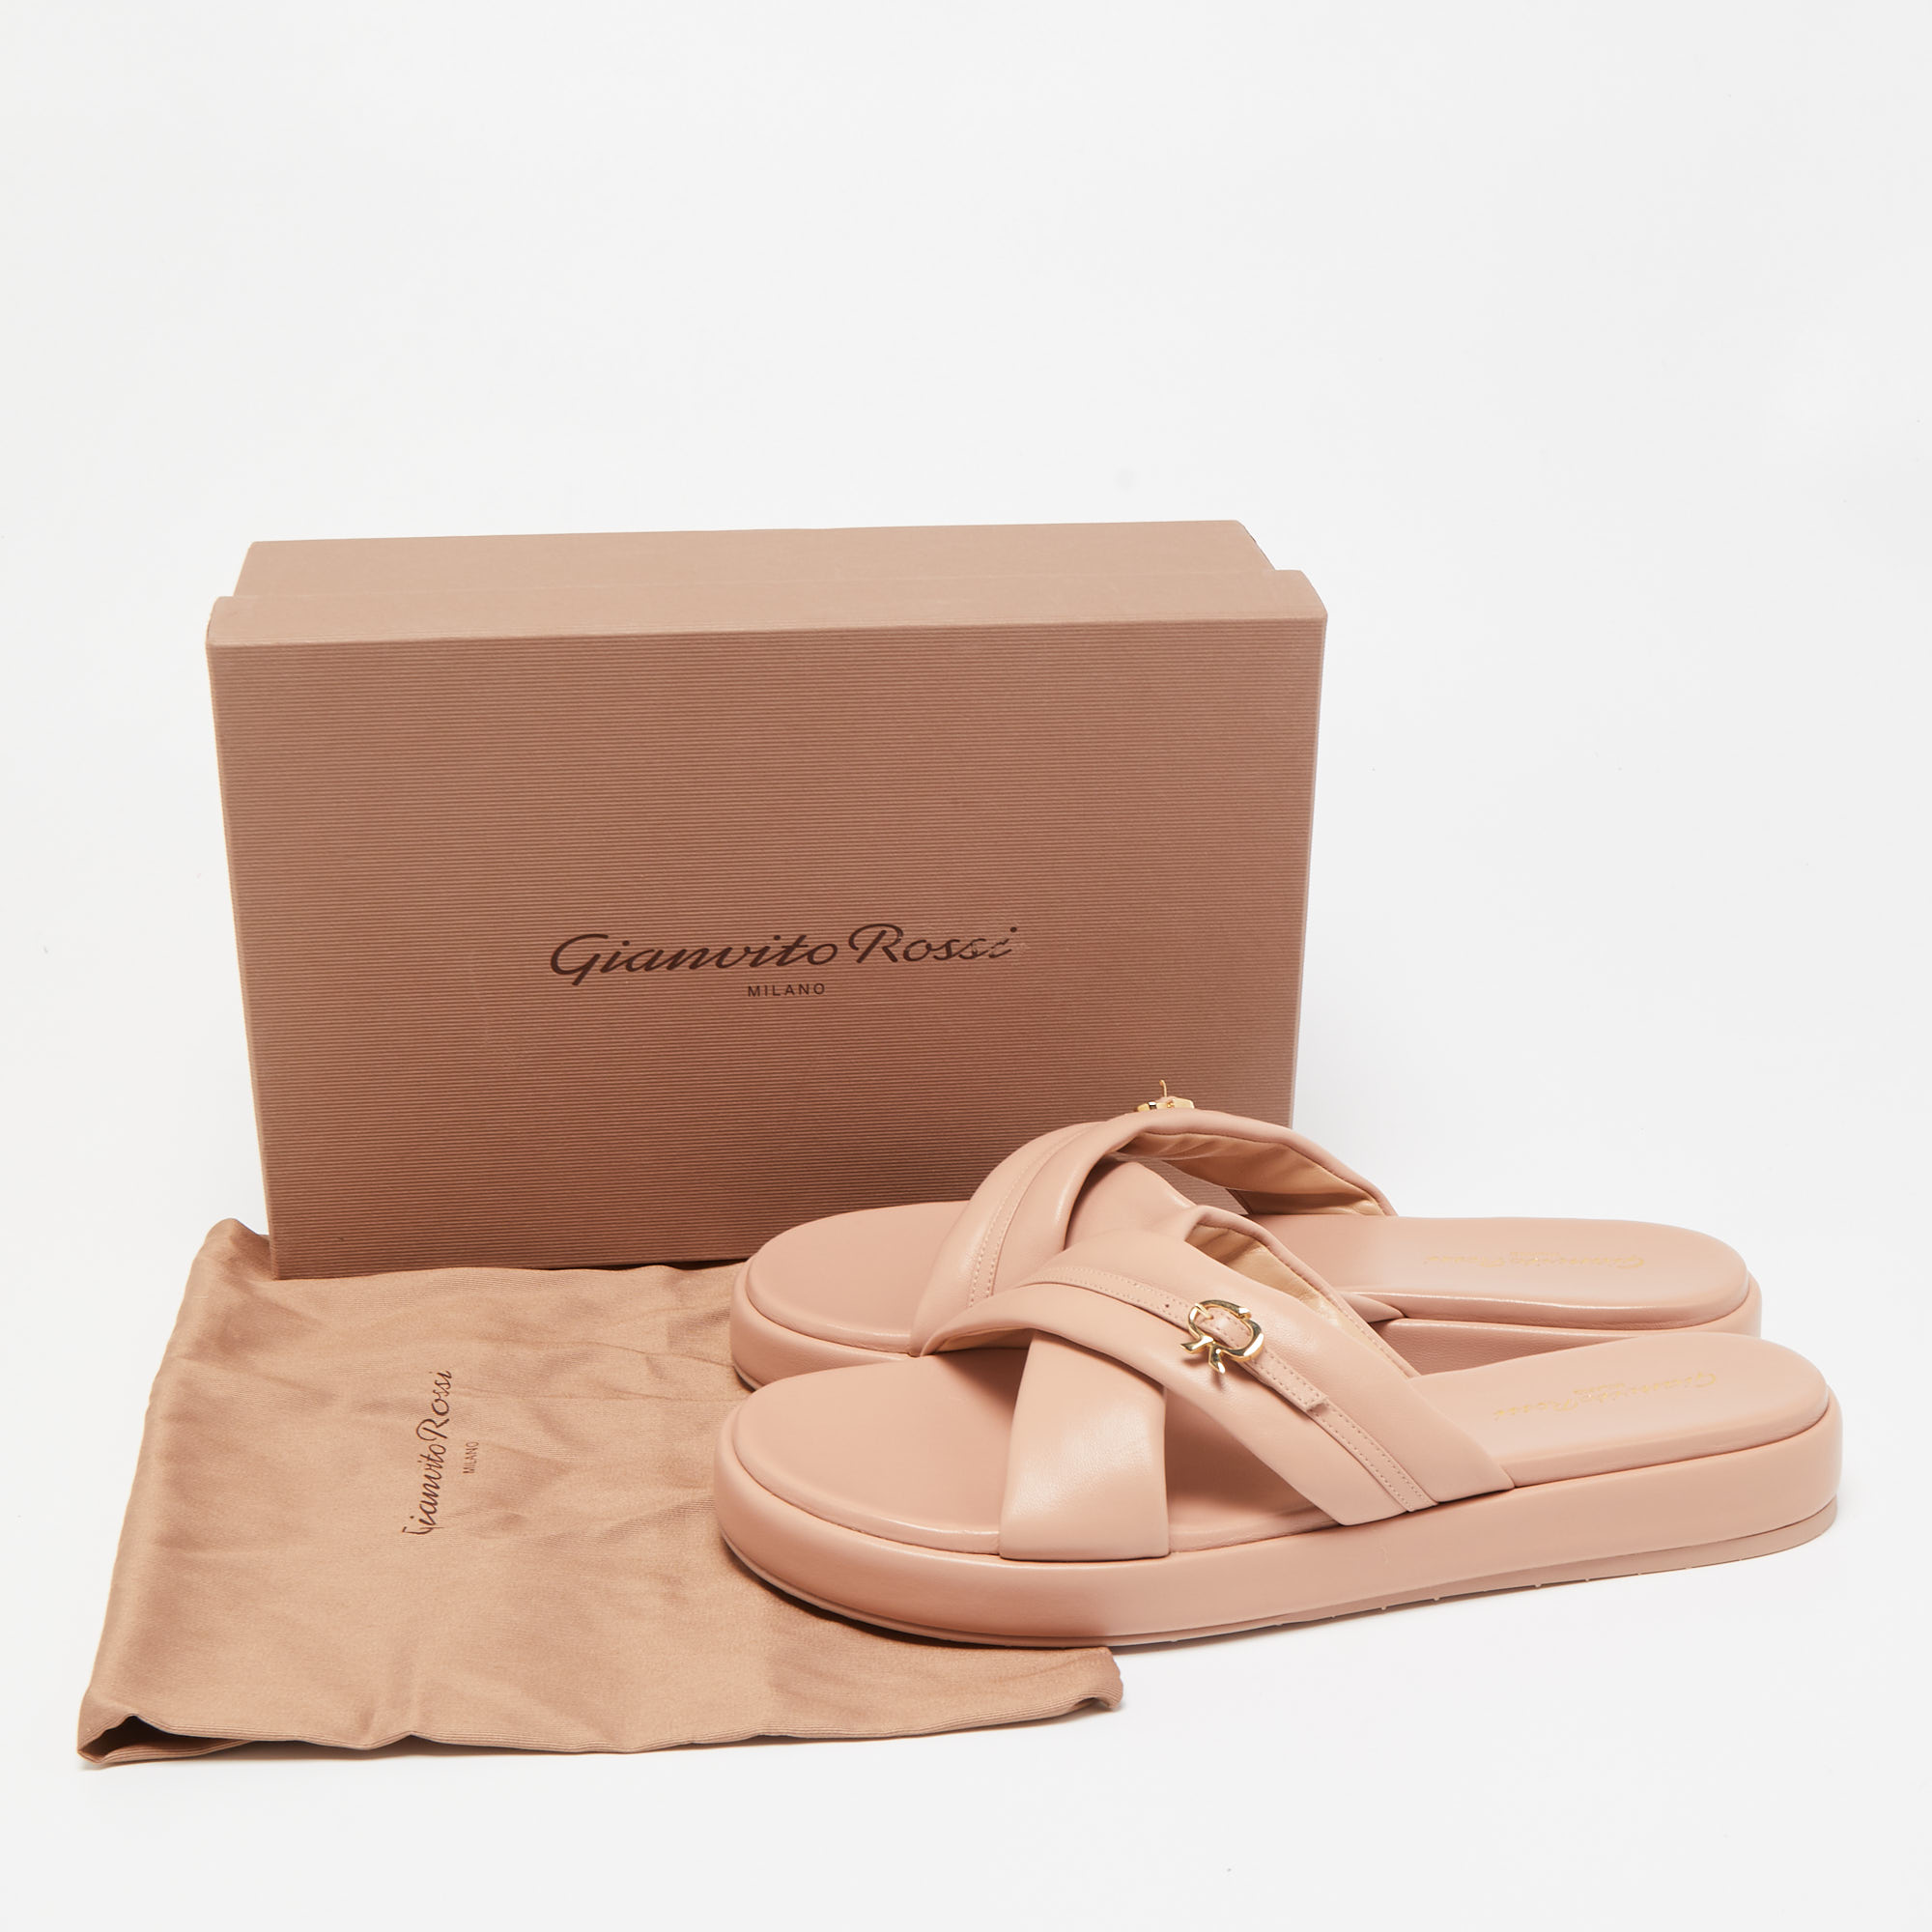 Gianvito Rossi Beige Leather Flatofrm Slide Sandals Size 41.5